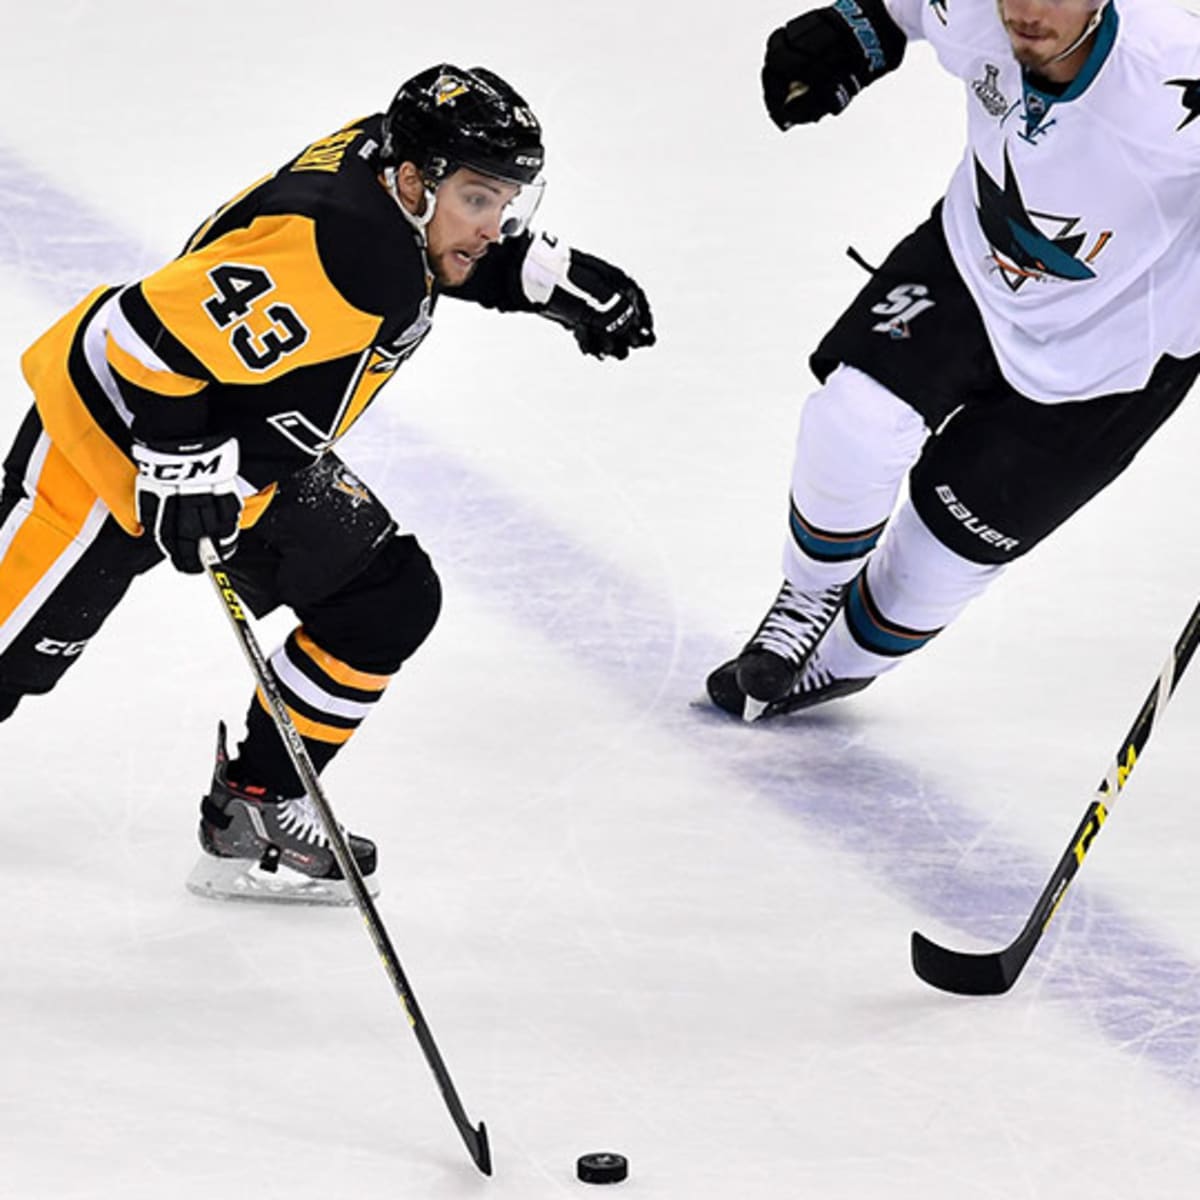 Phil Kessel's Goal Lifts Penguins to Even Series With Senators